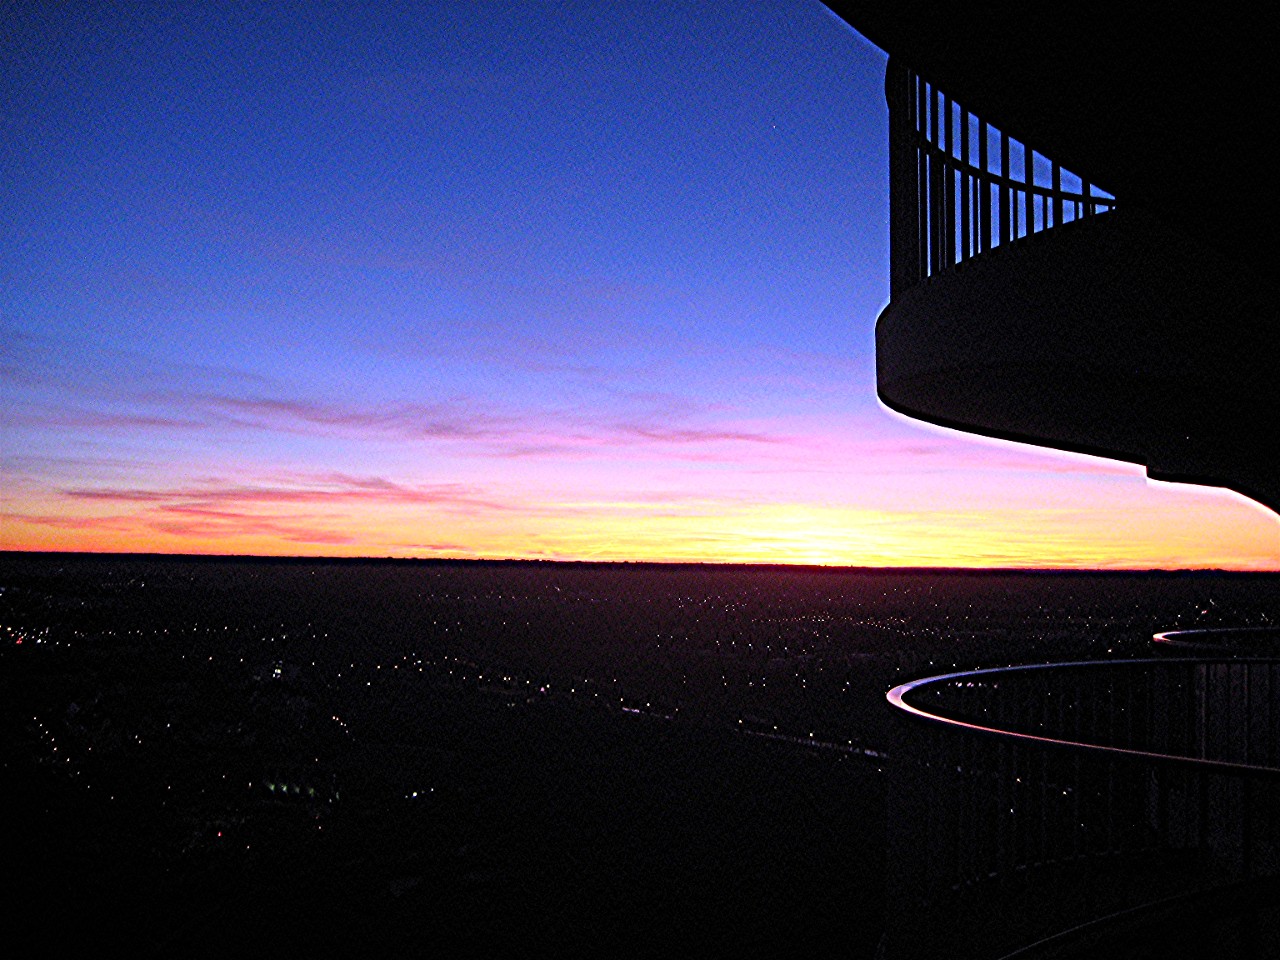 Hotelturm Sonnenuntergang